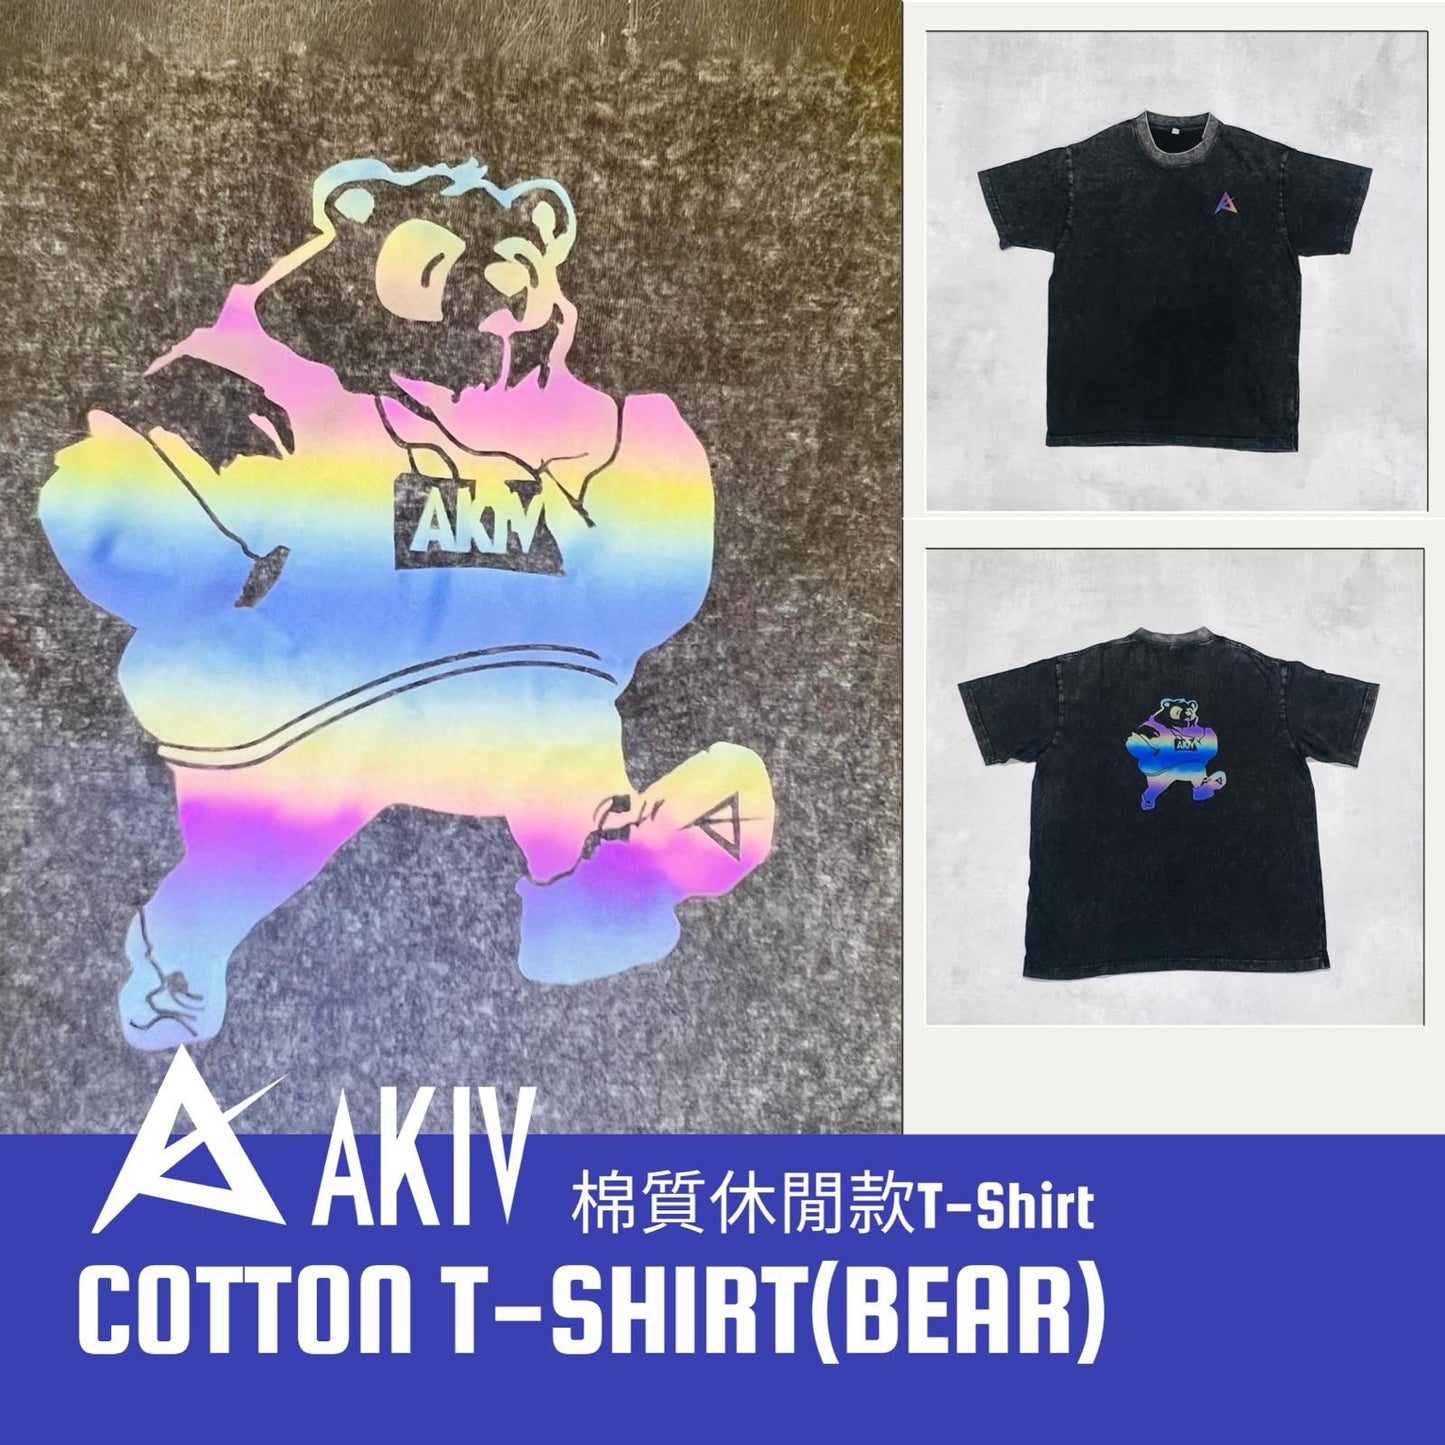 AKIV Cotton T-Shirt (Bear)